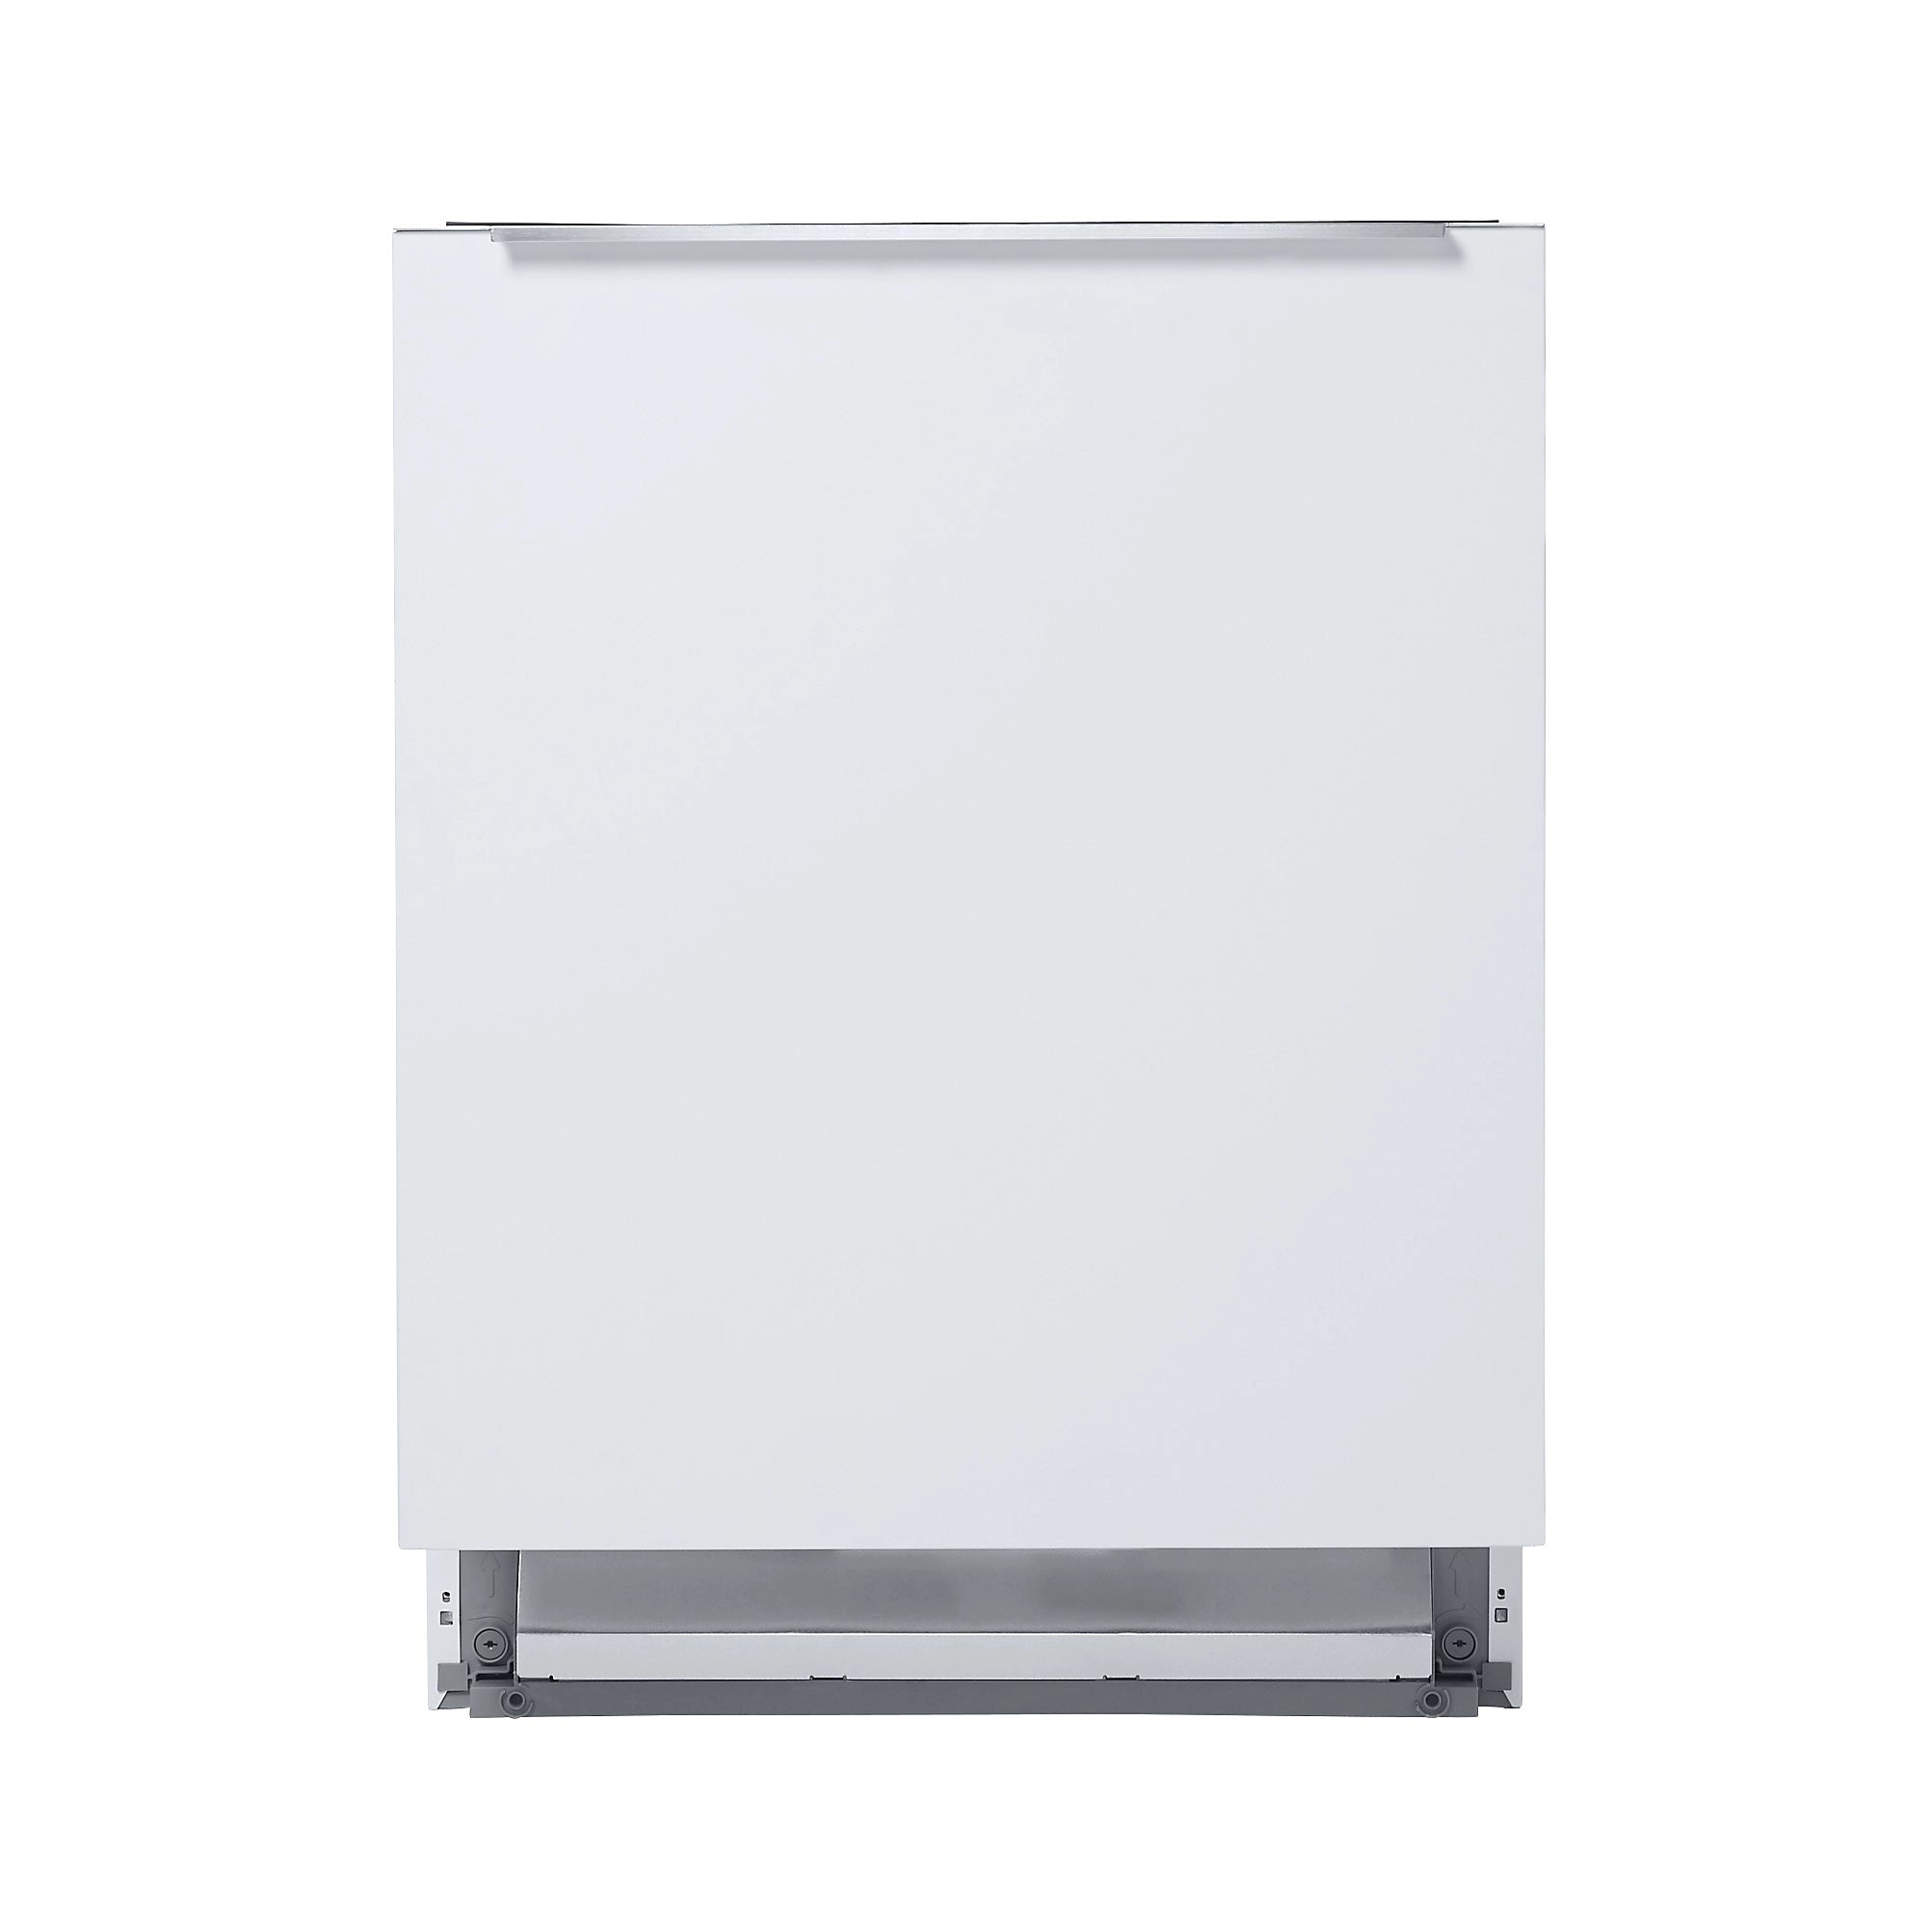 Beko DIN15Q10 Integrated Full size Dishwasher - Black & white 9902